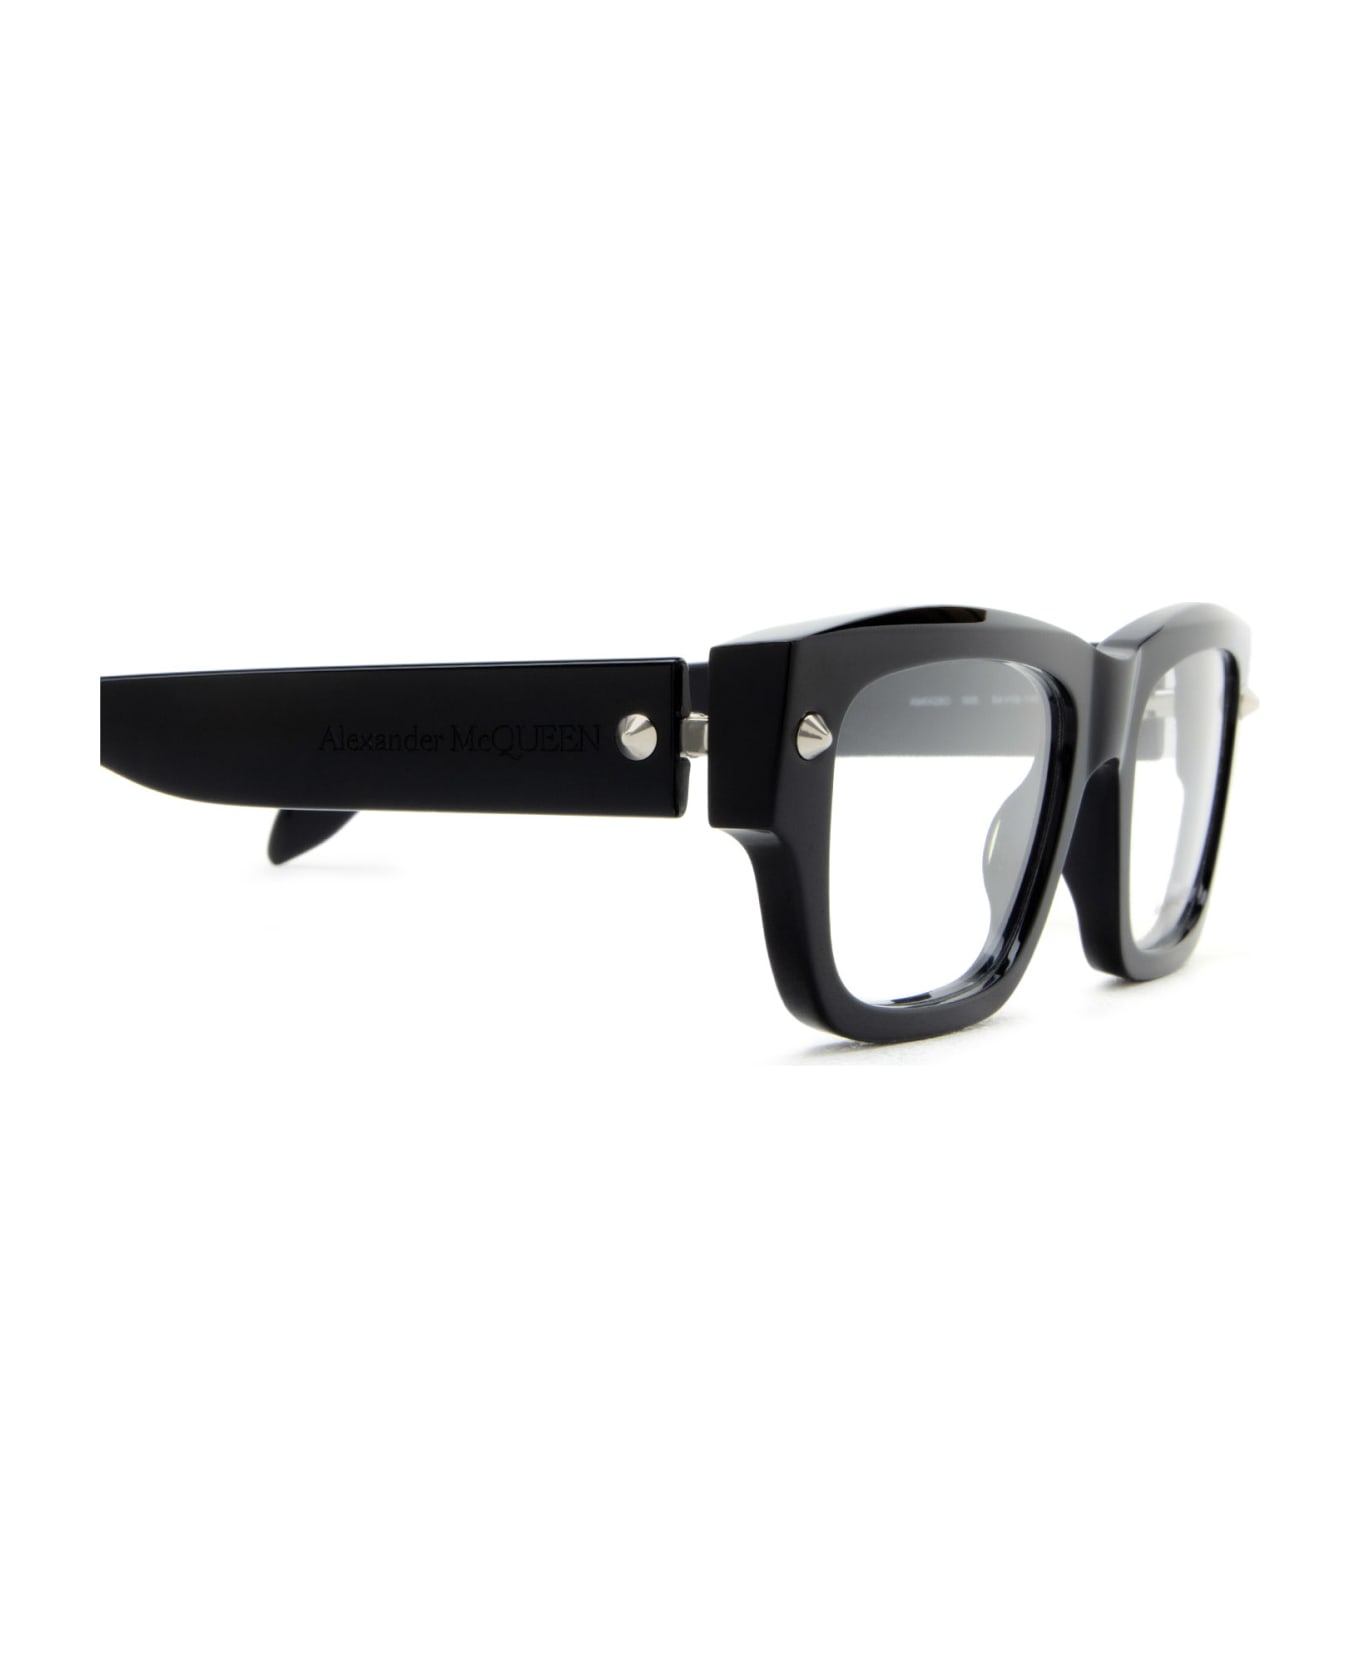 Alexander McQueen Eyewear Am0428o Black Glasses - Black